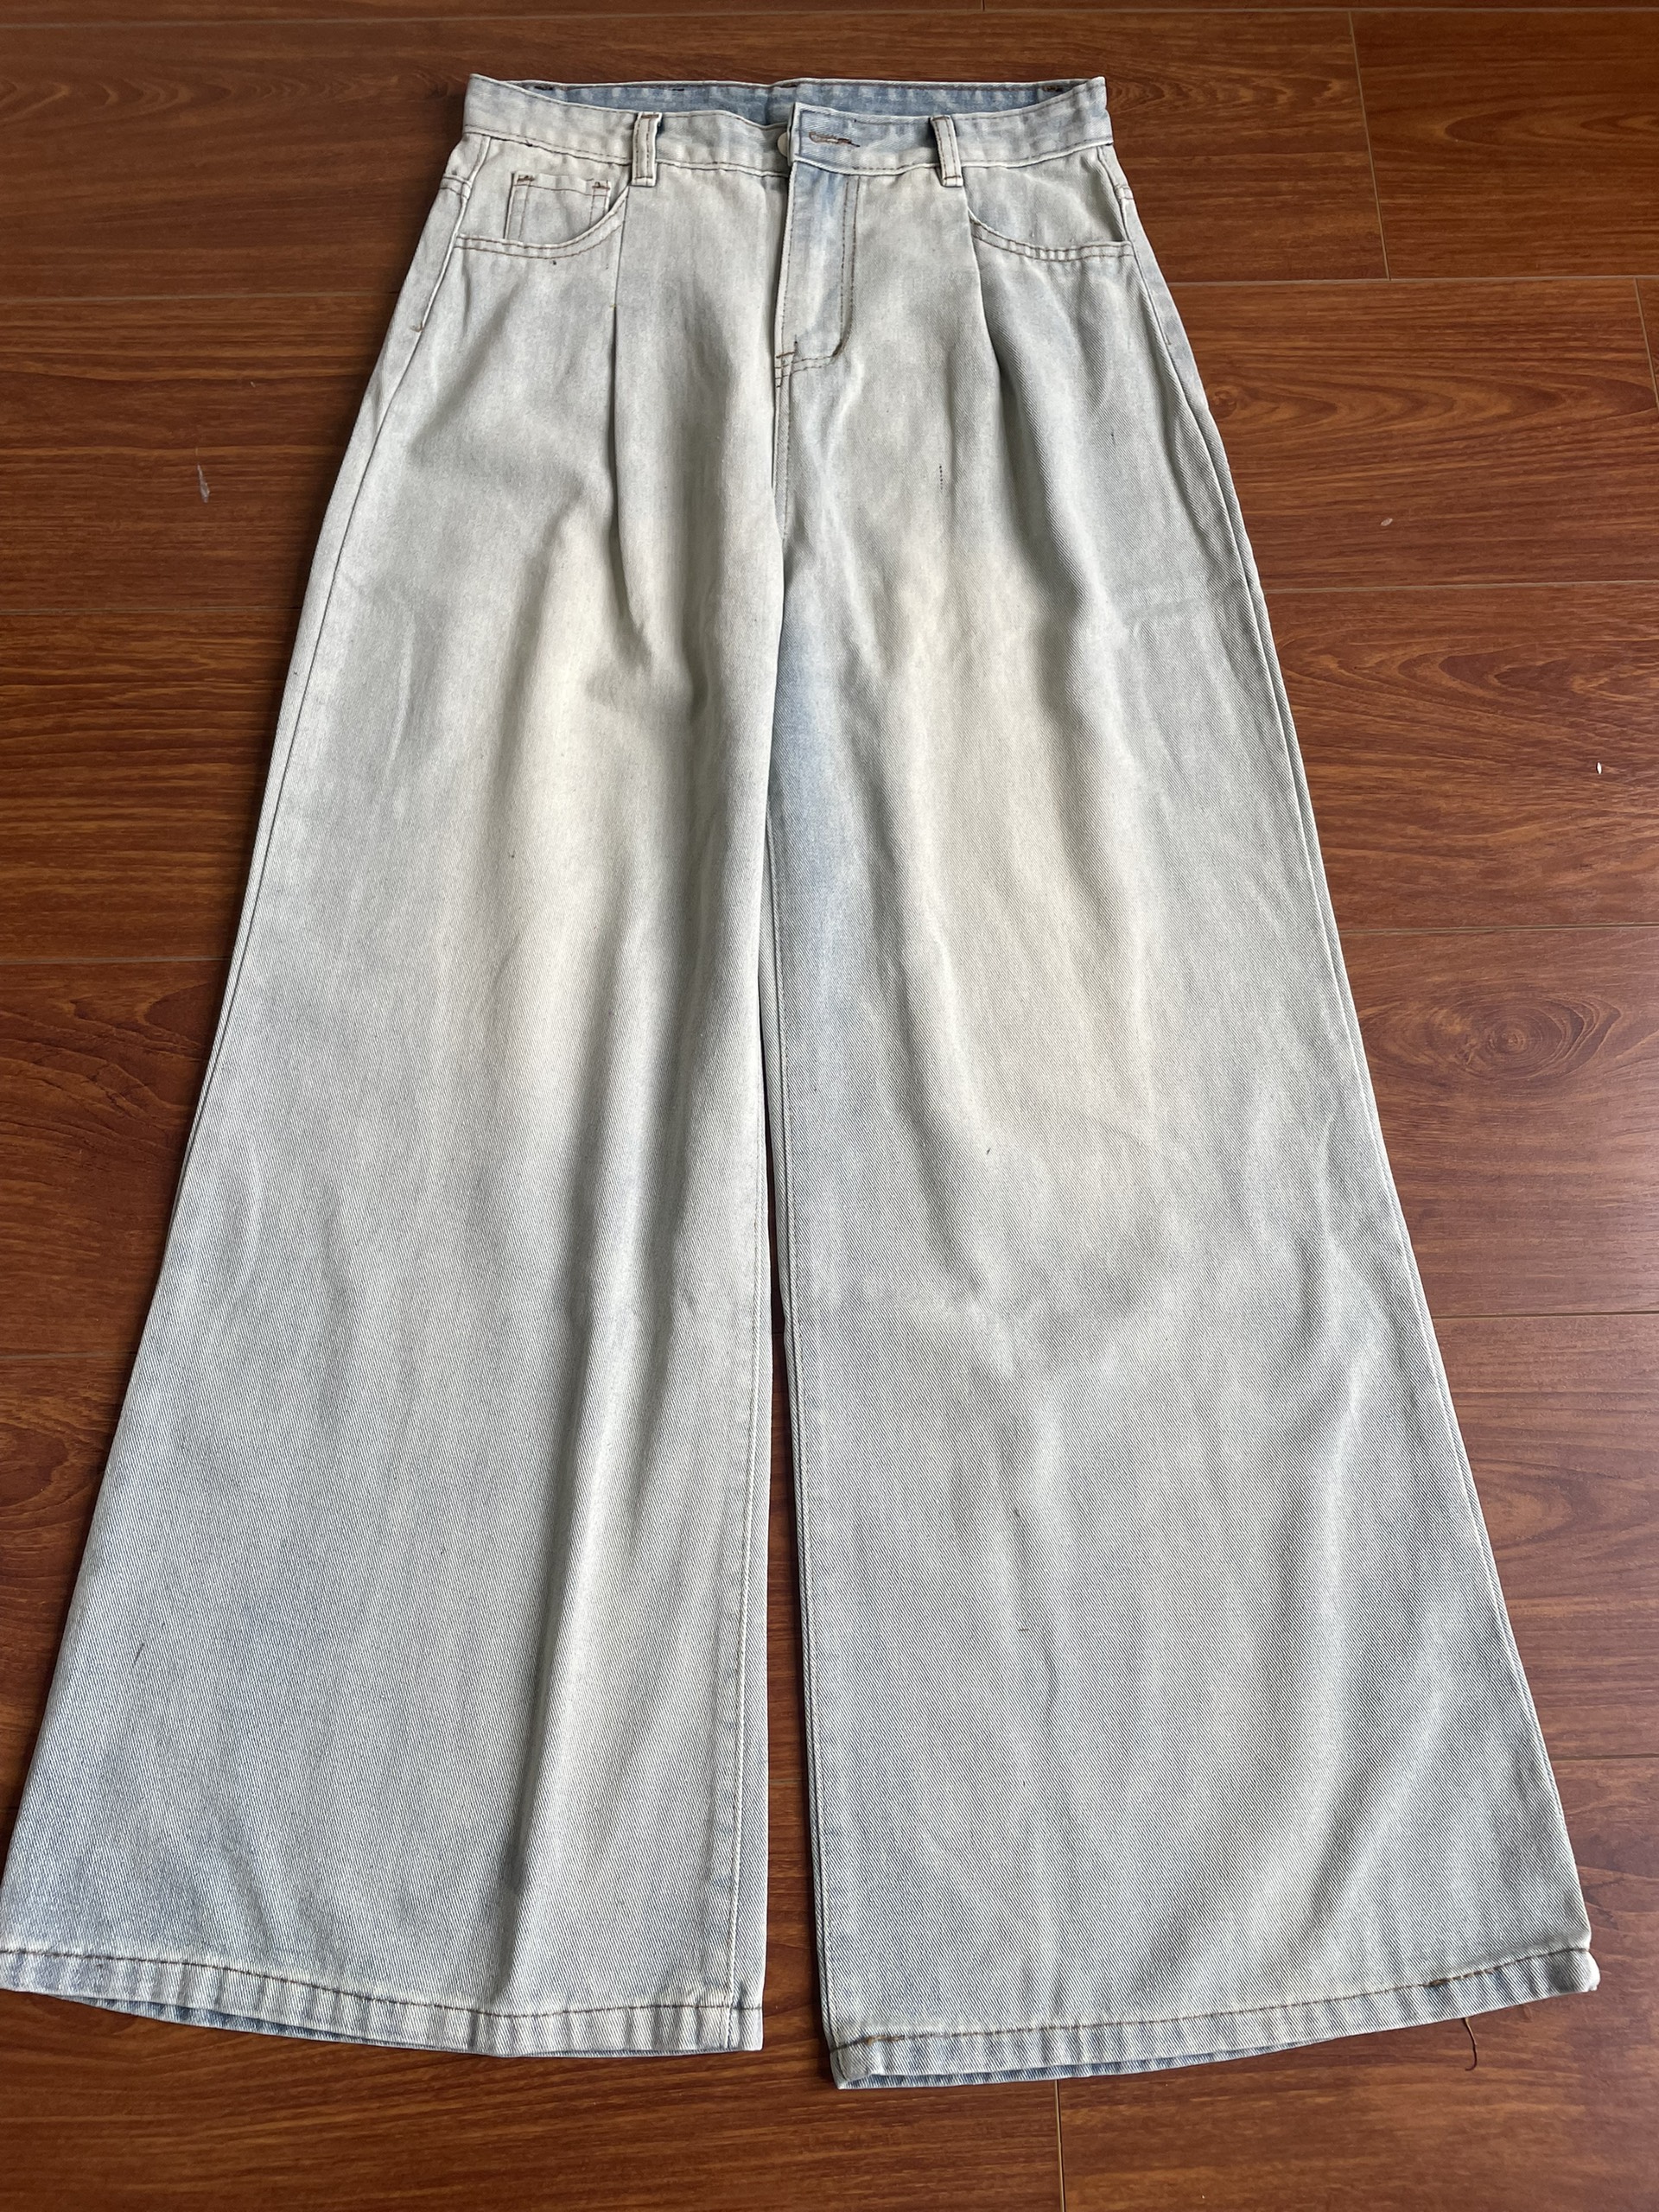 Quần jeans xanh bạc ánh rêu Jean7622